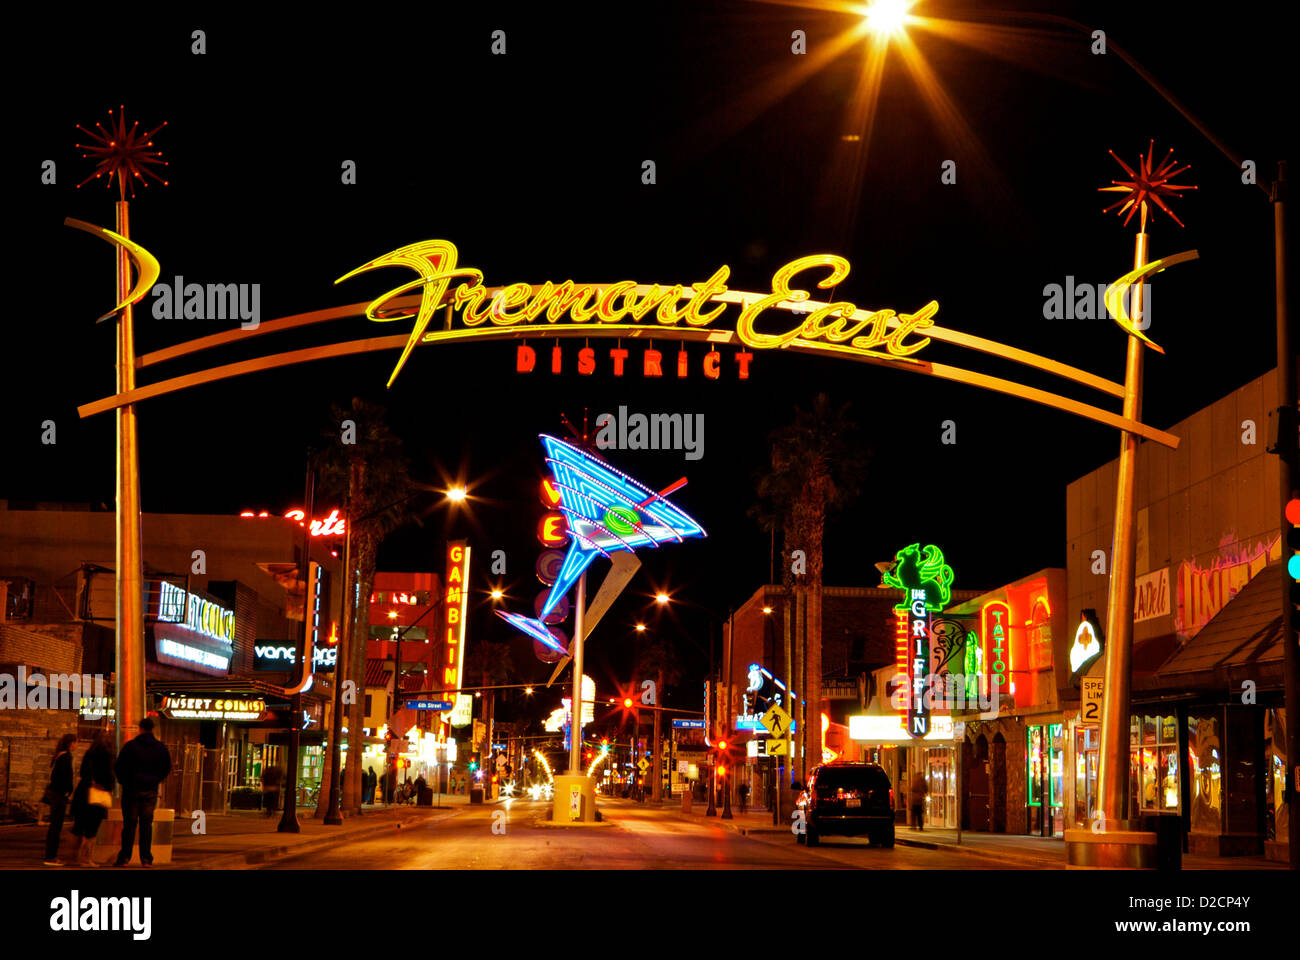 Leuchtreklame Fremont East District Tor Downtown Las Vegas bei Nacht Stockfoto